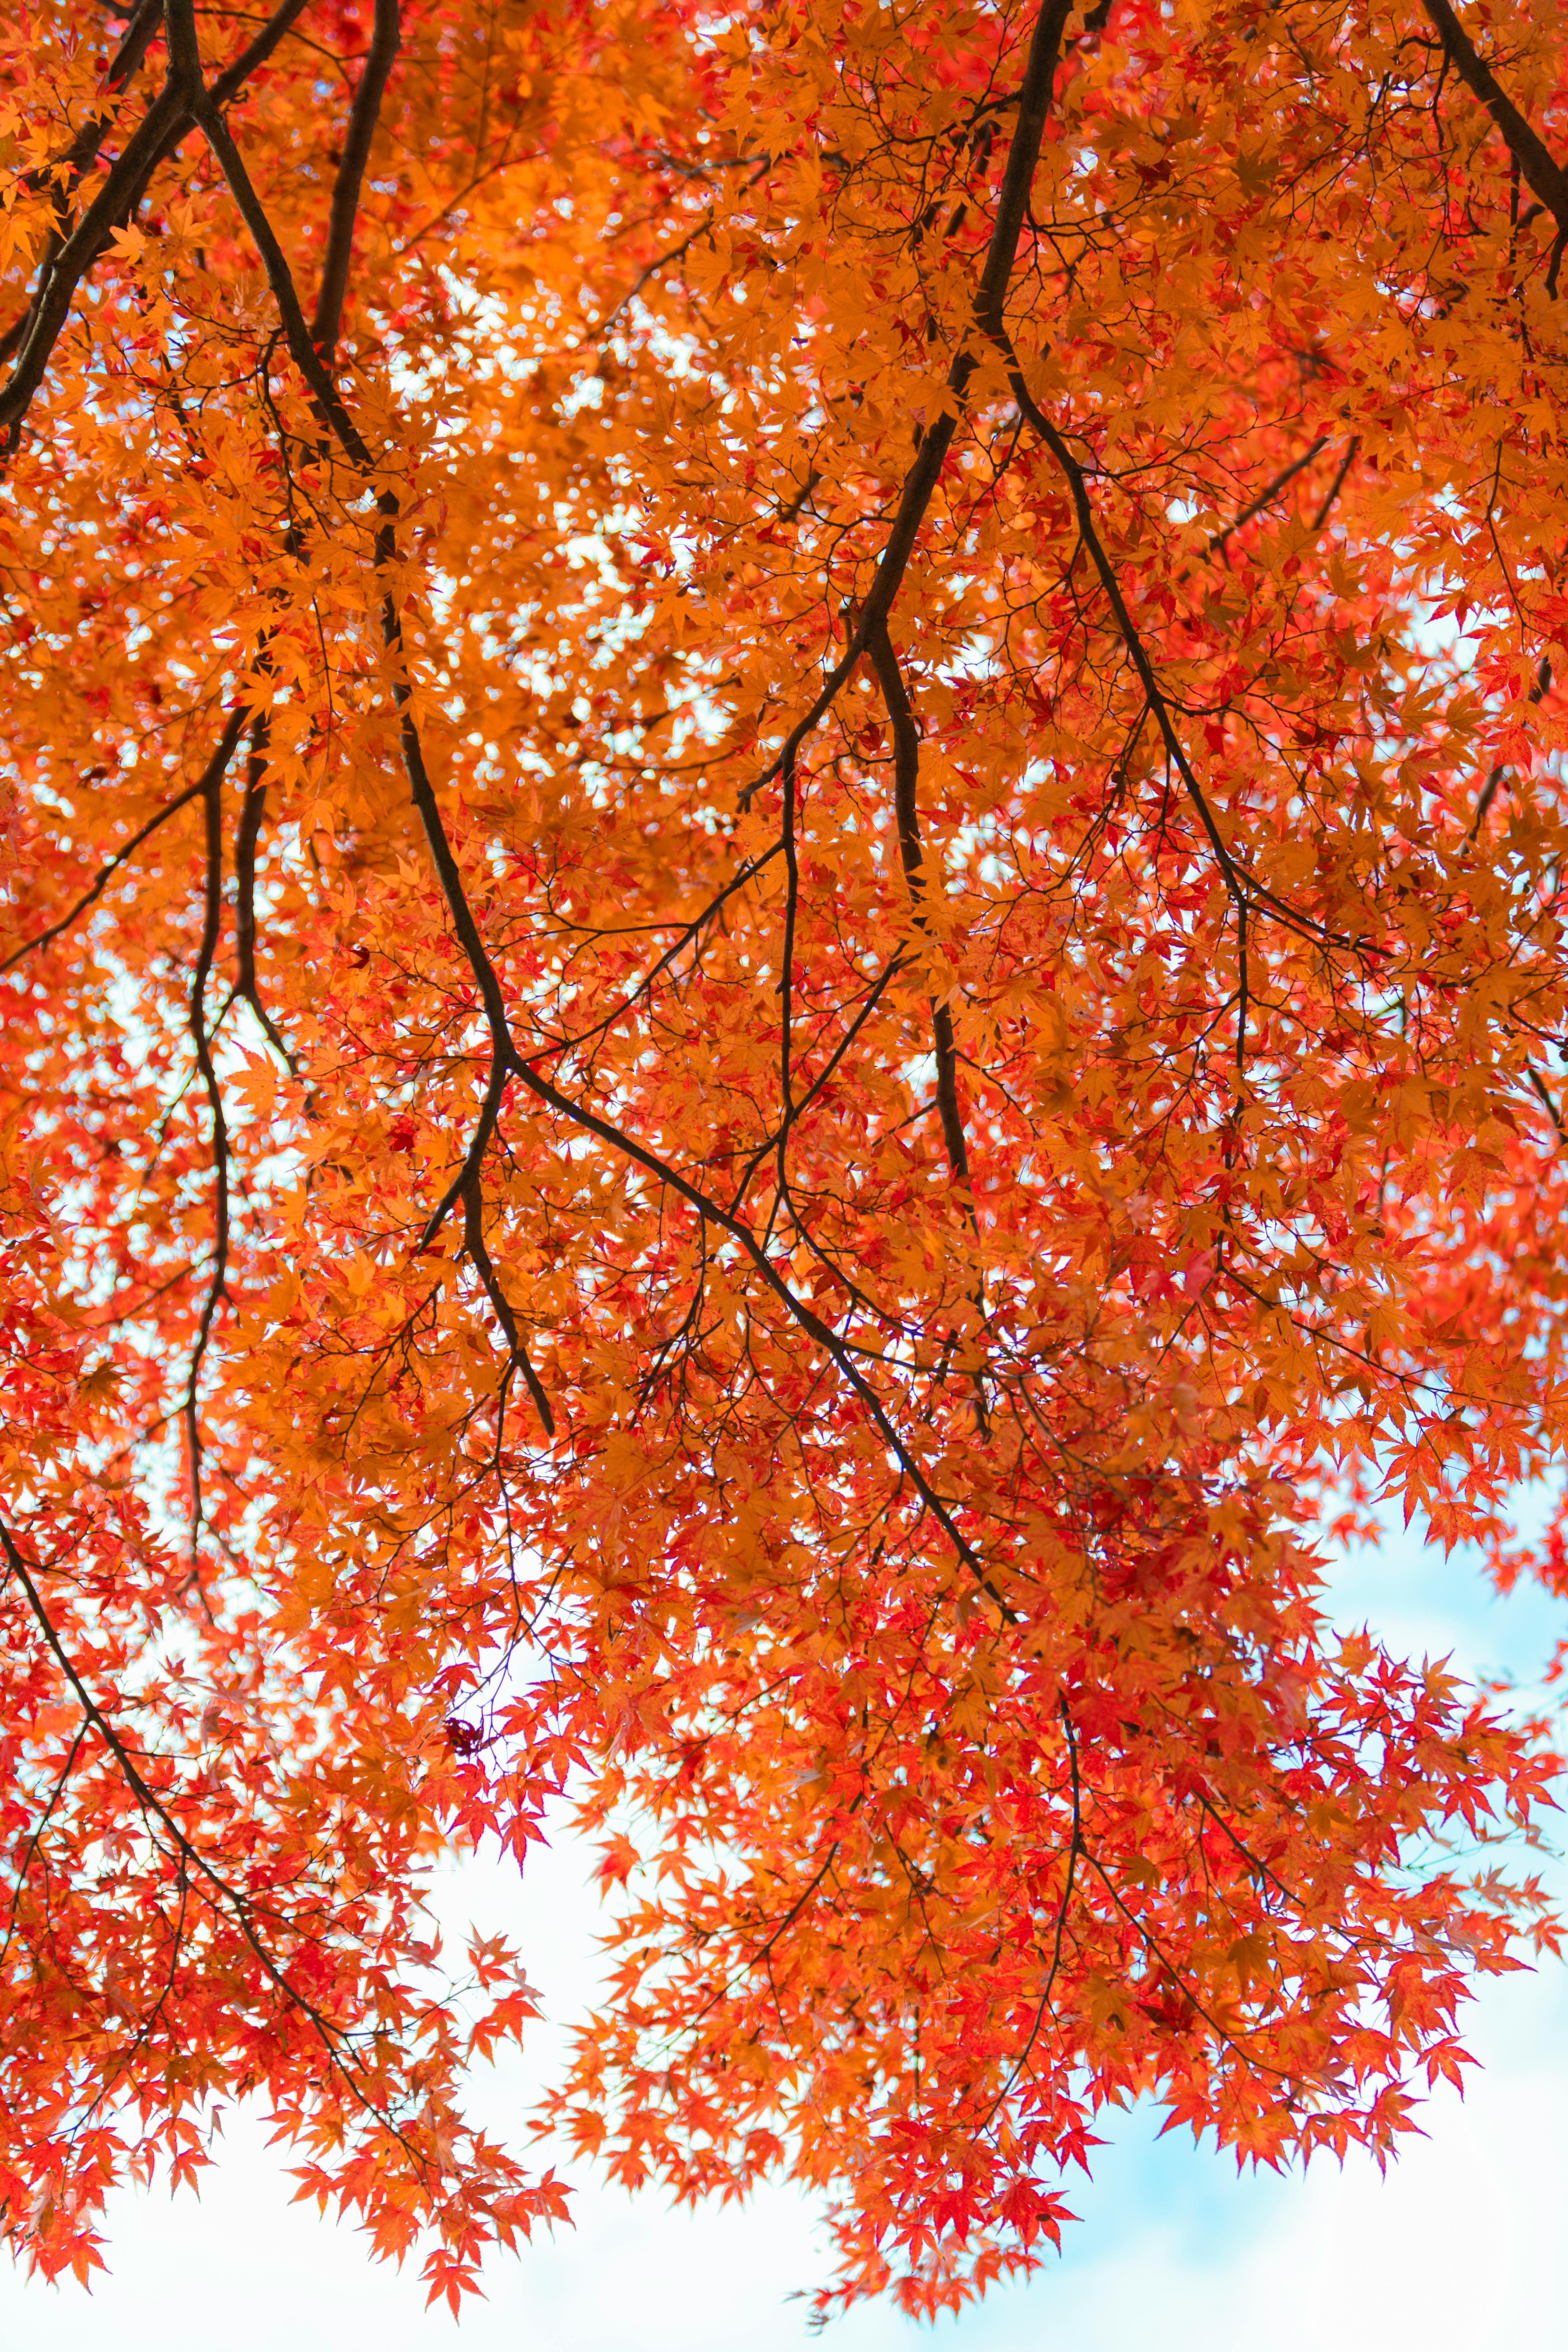 tree leaves background